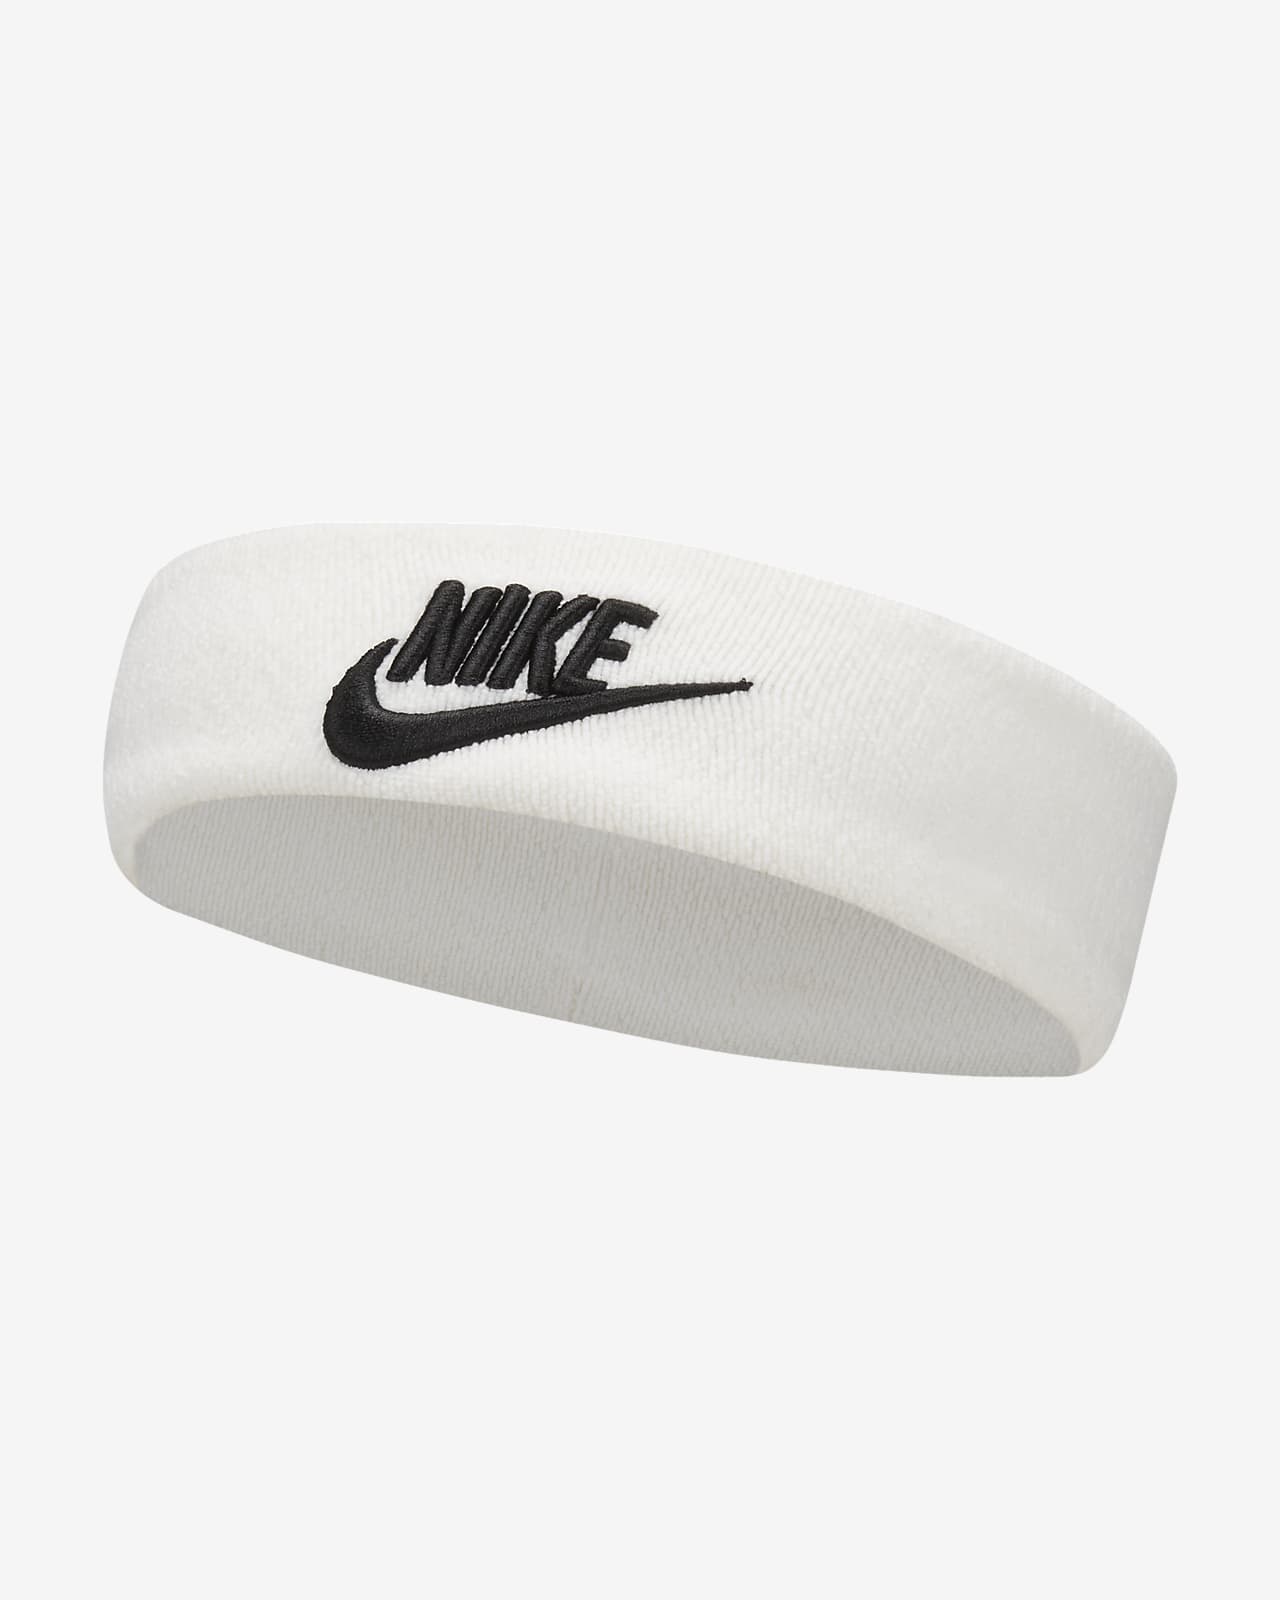 annoncere Klassificer Rough sleep Bredt Nike Athletic-pandebånd. Nike DK